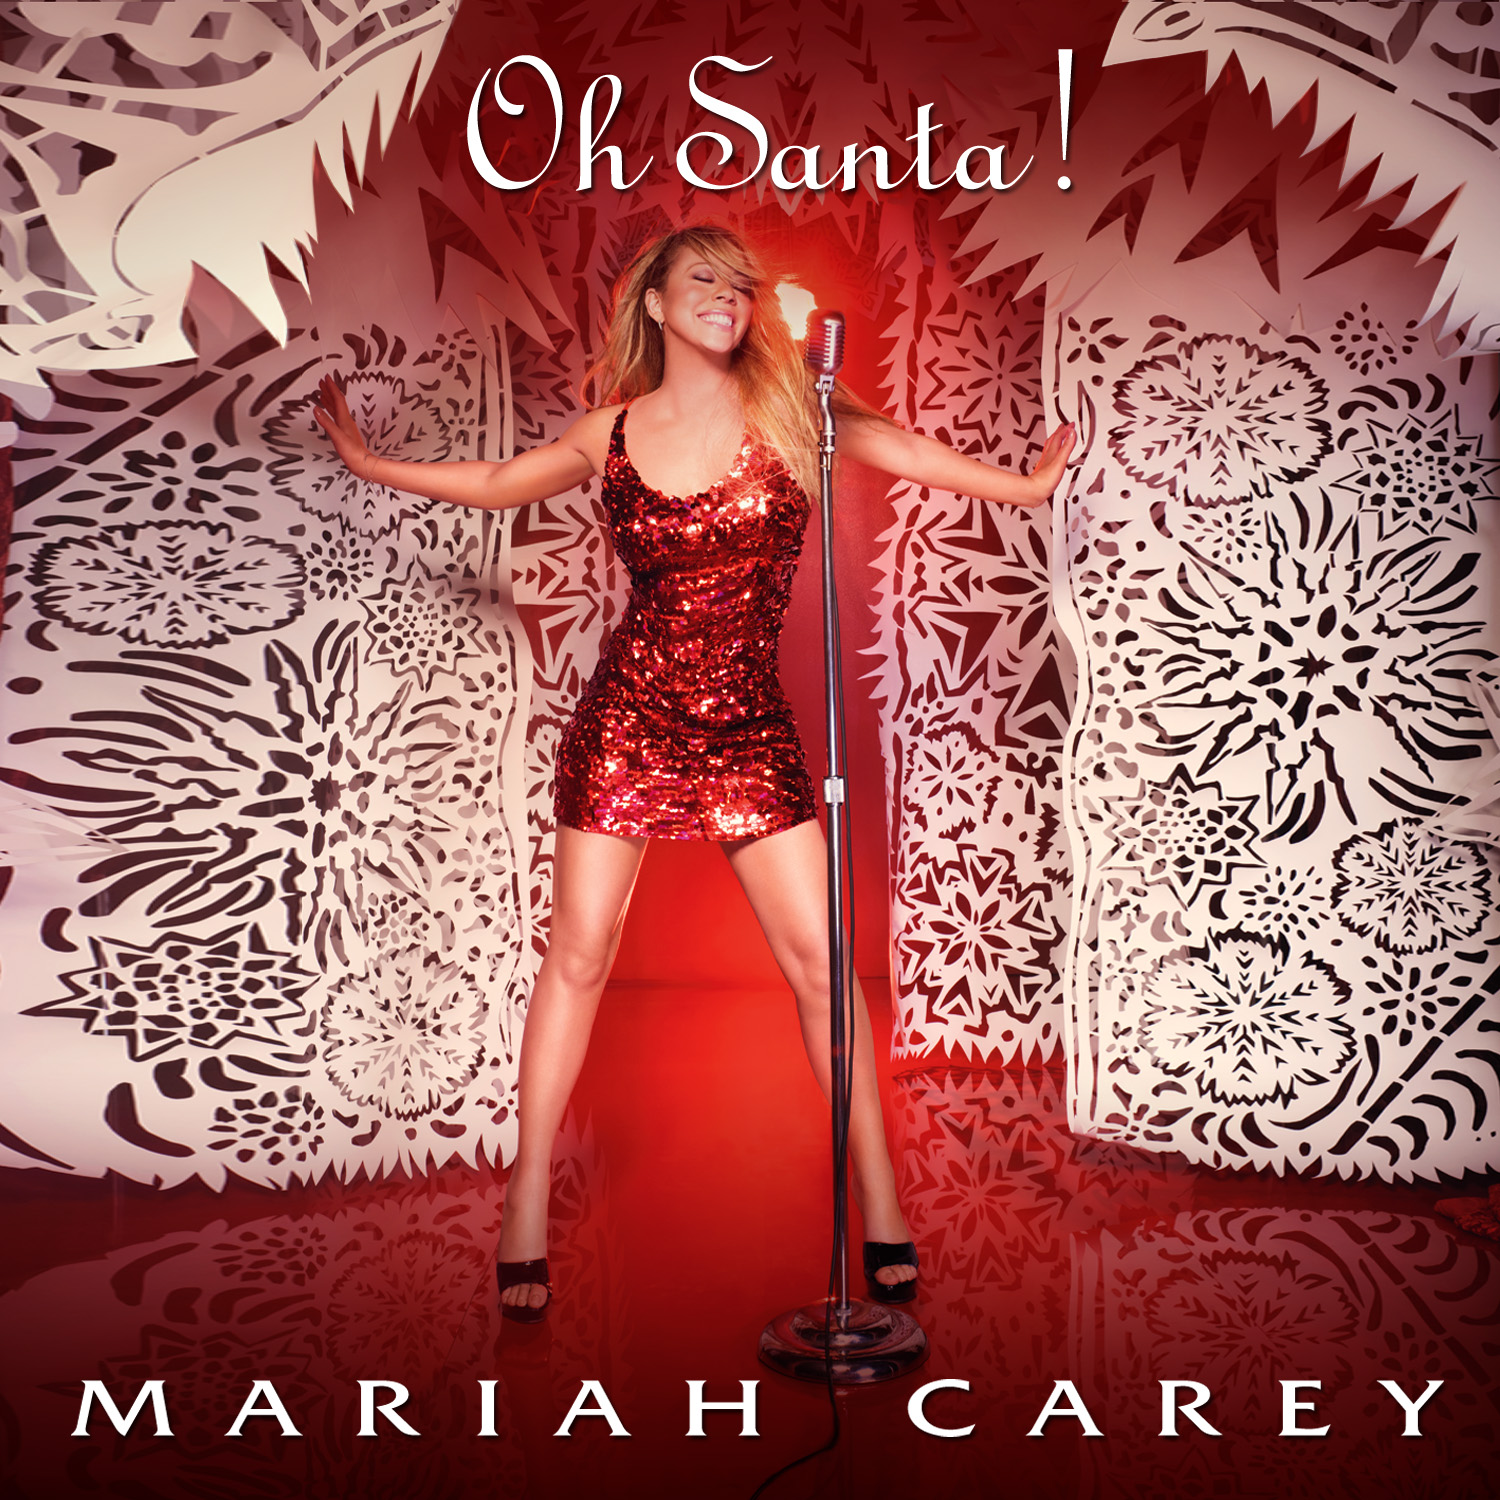 http://4.bp.blogspot.com/_mupIVJbjvuU/TKbGNOghQmI/AAAAAAAAHXc/A5eArs8YvtQ/s1600/Mariah+Carey+-+Oh+Santa!+(Official+Single+Cover).jpg